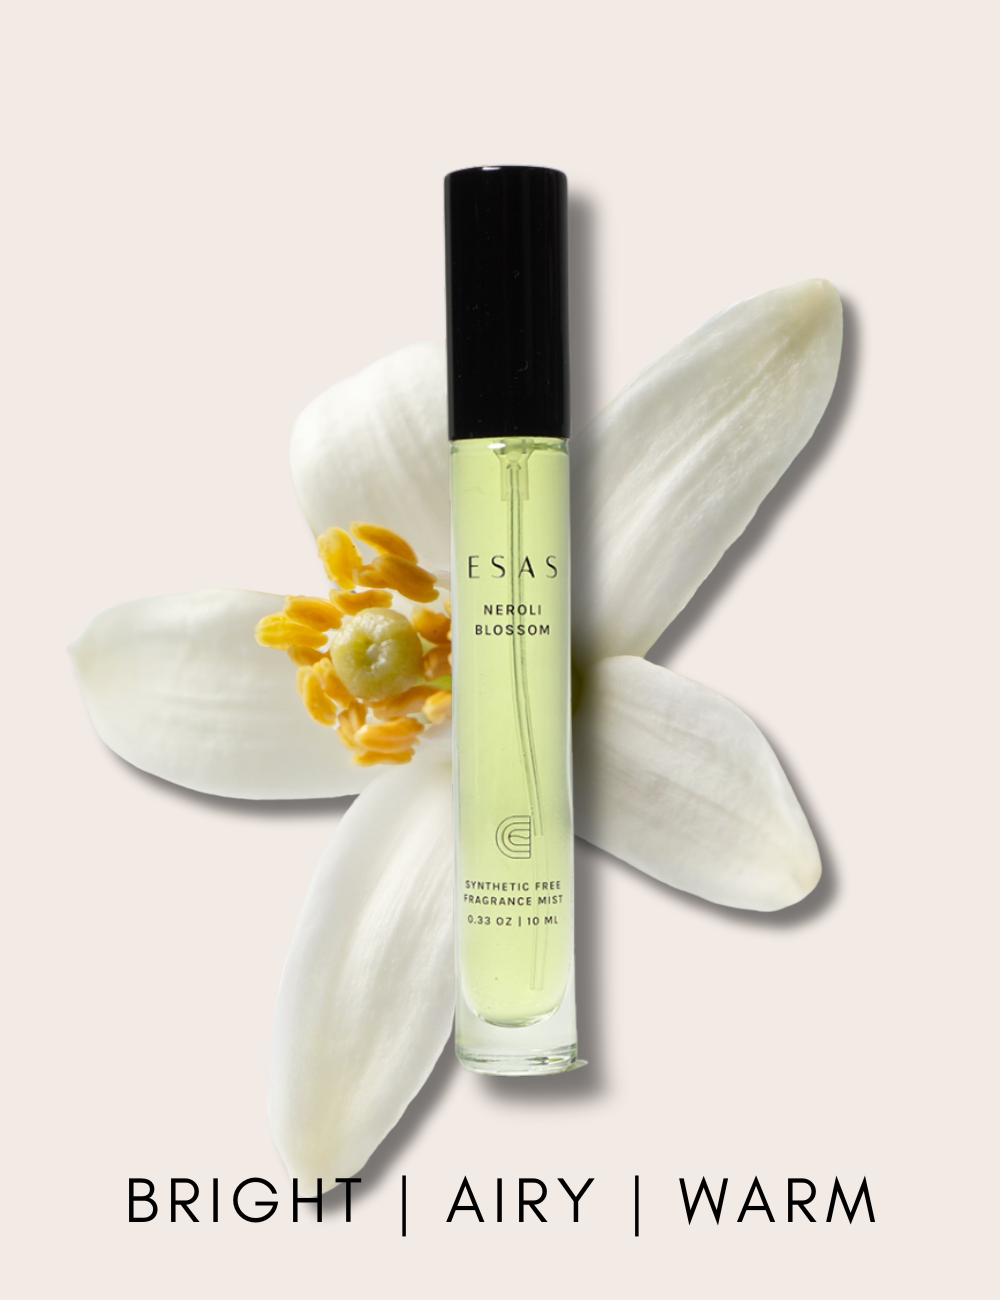 Orange Blossoms, Neroli Oil – atlas cosmetics